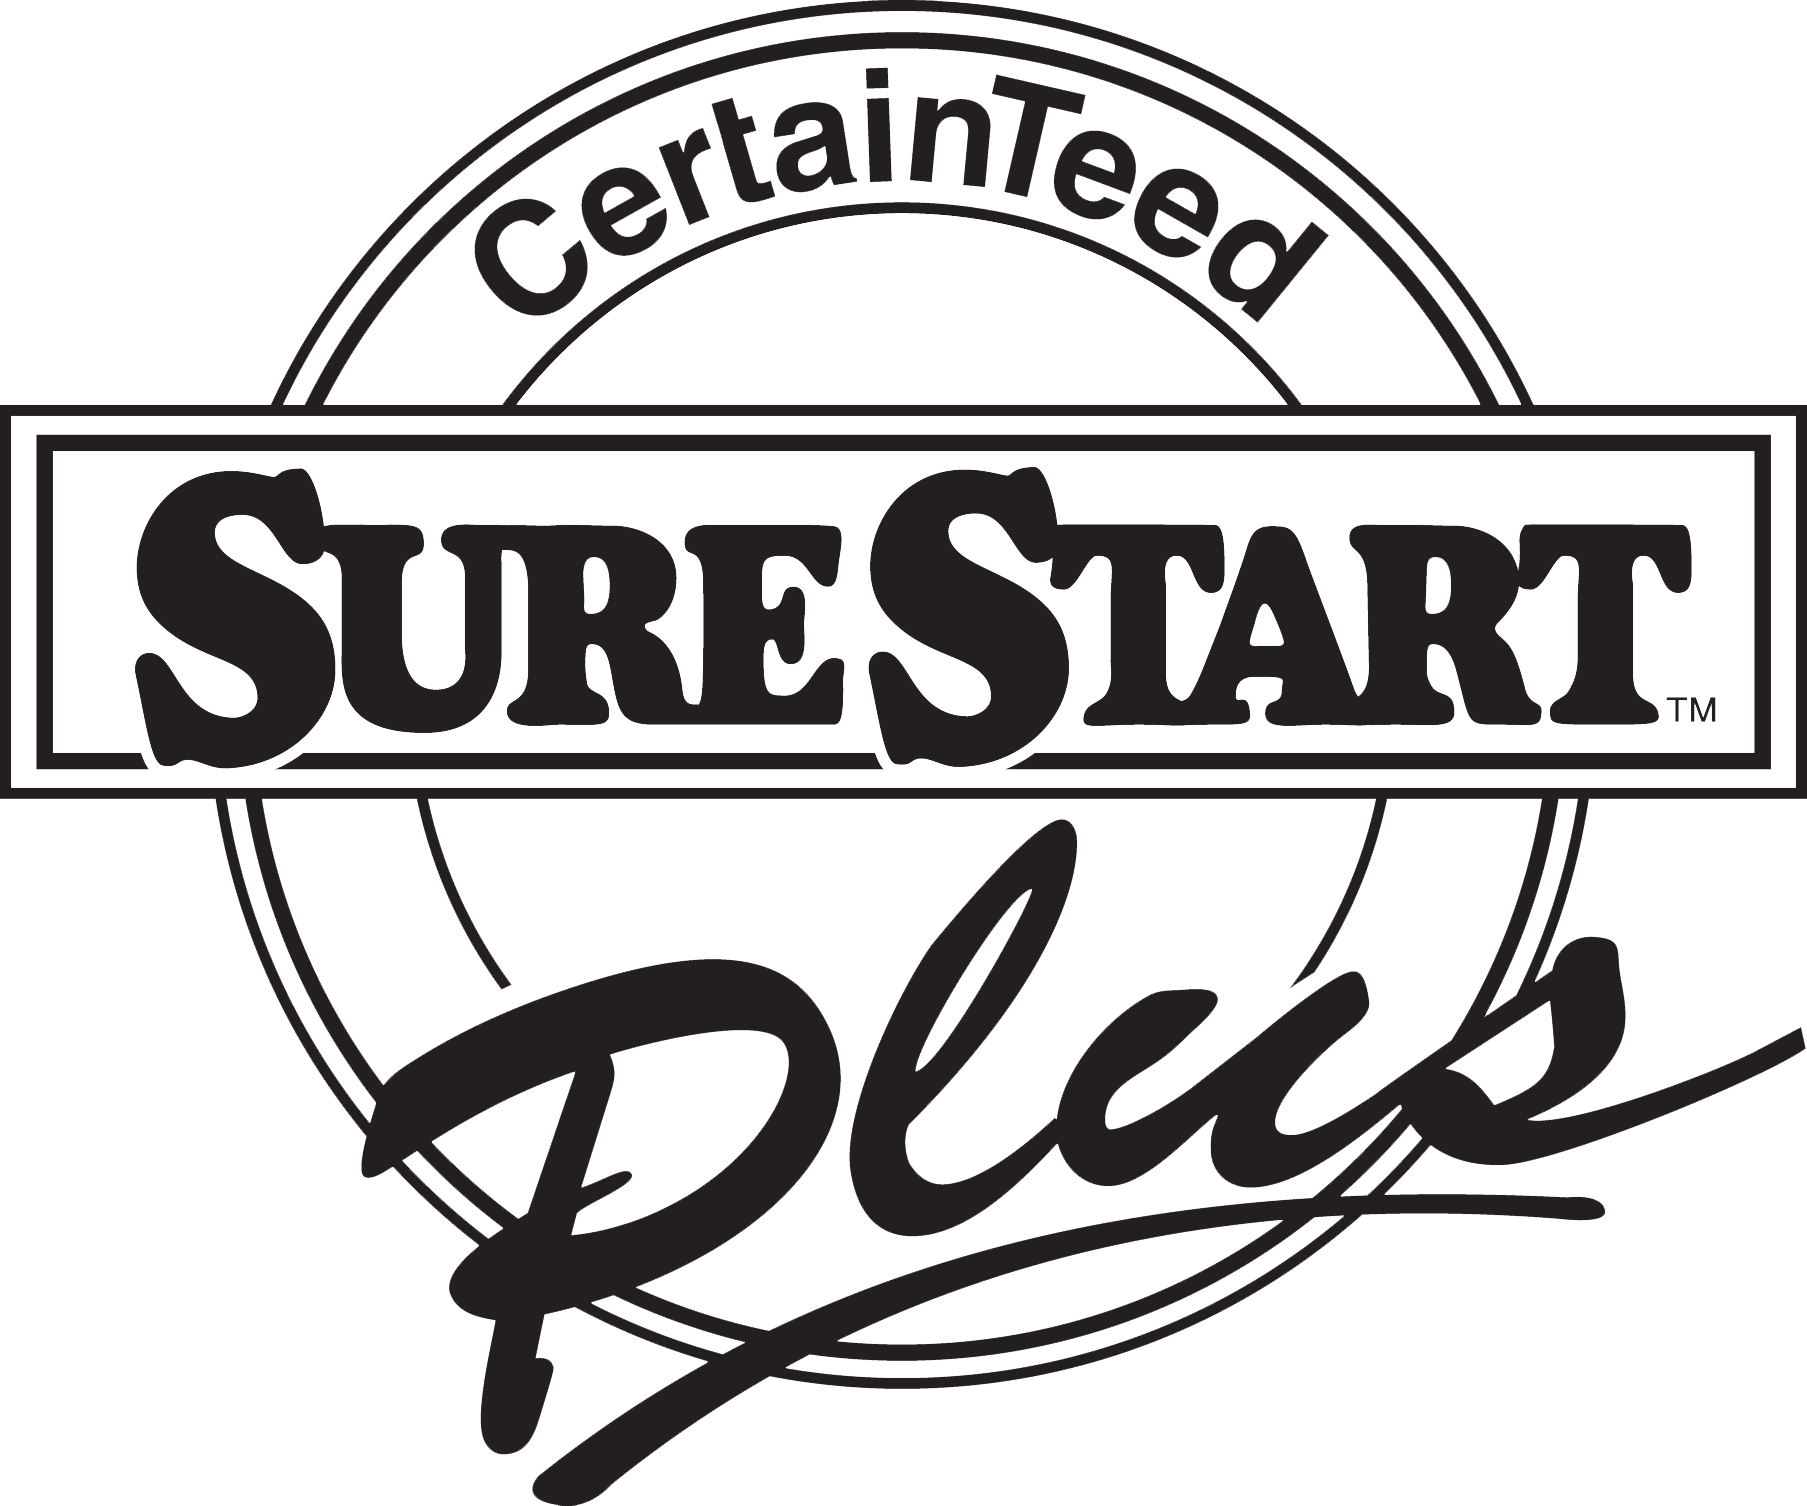 Certanteed Sure Start Plus logo